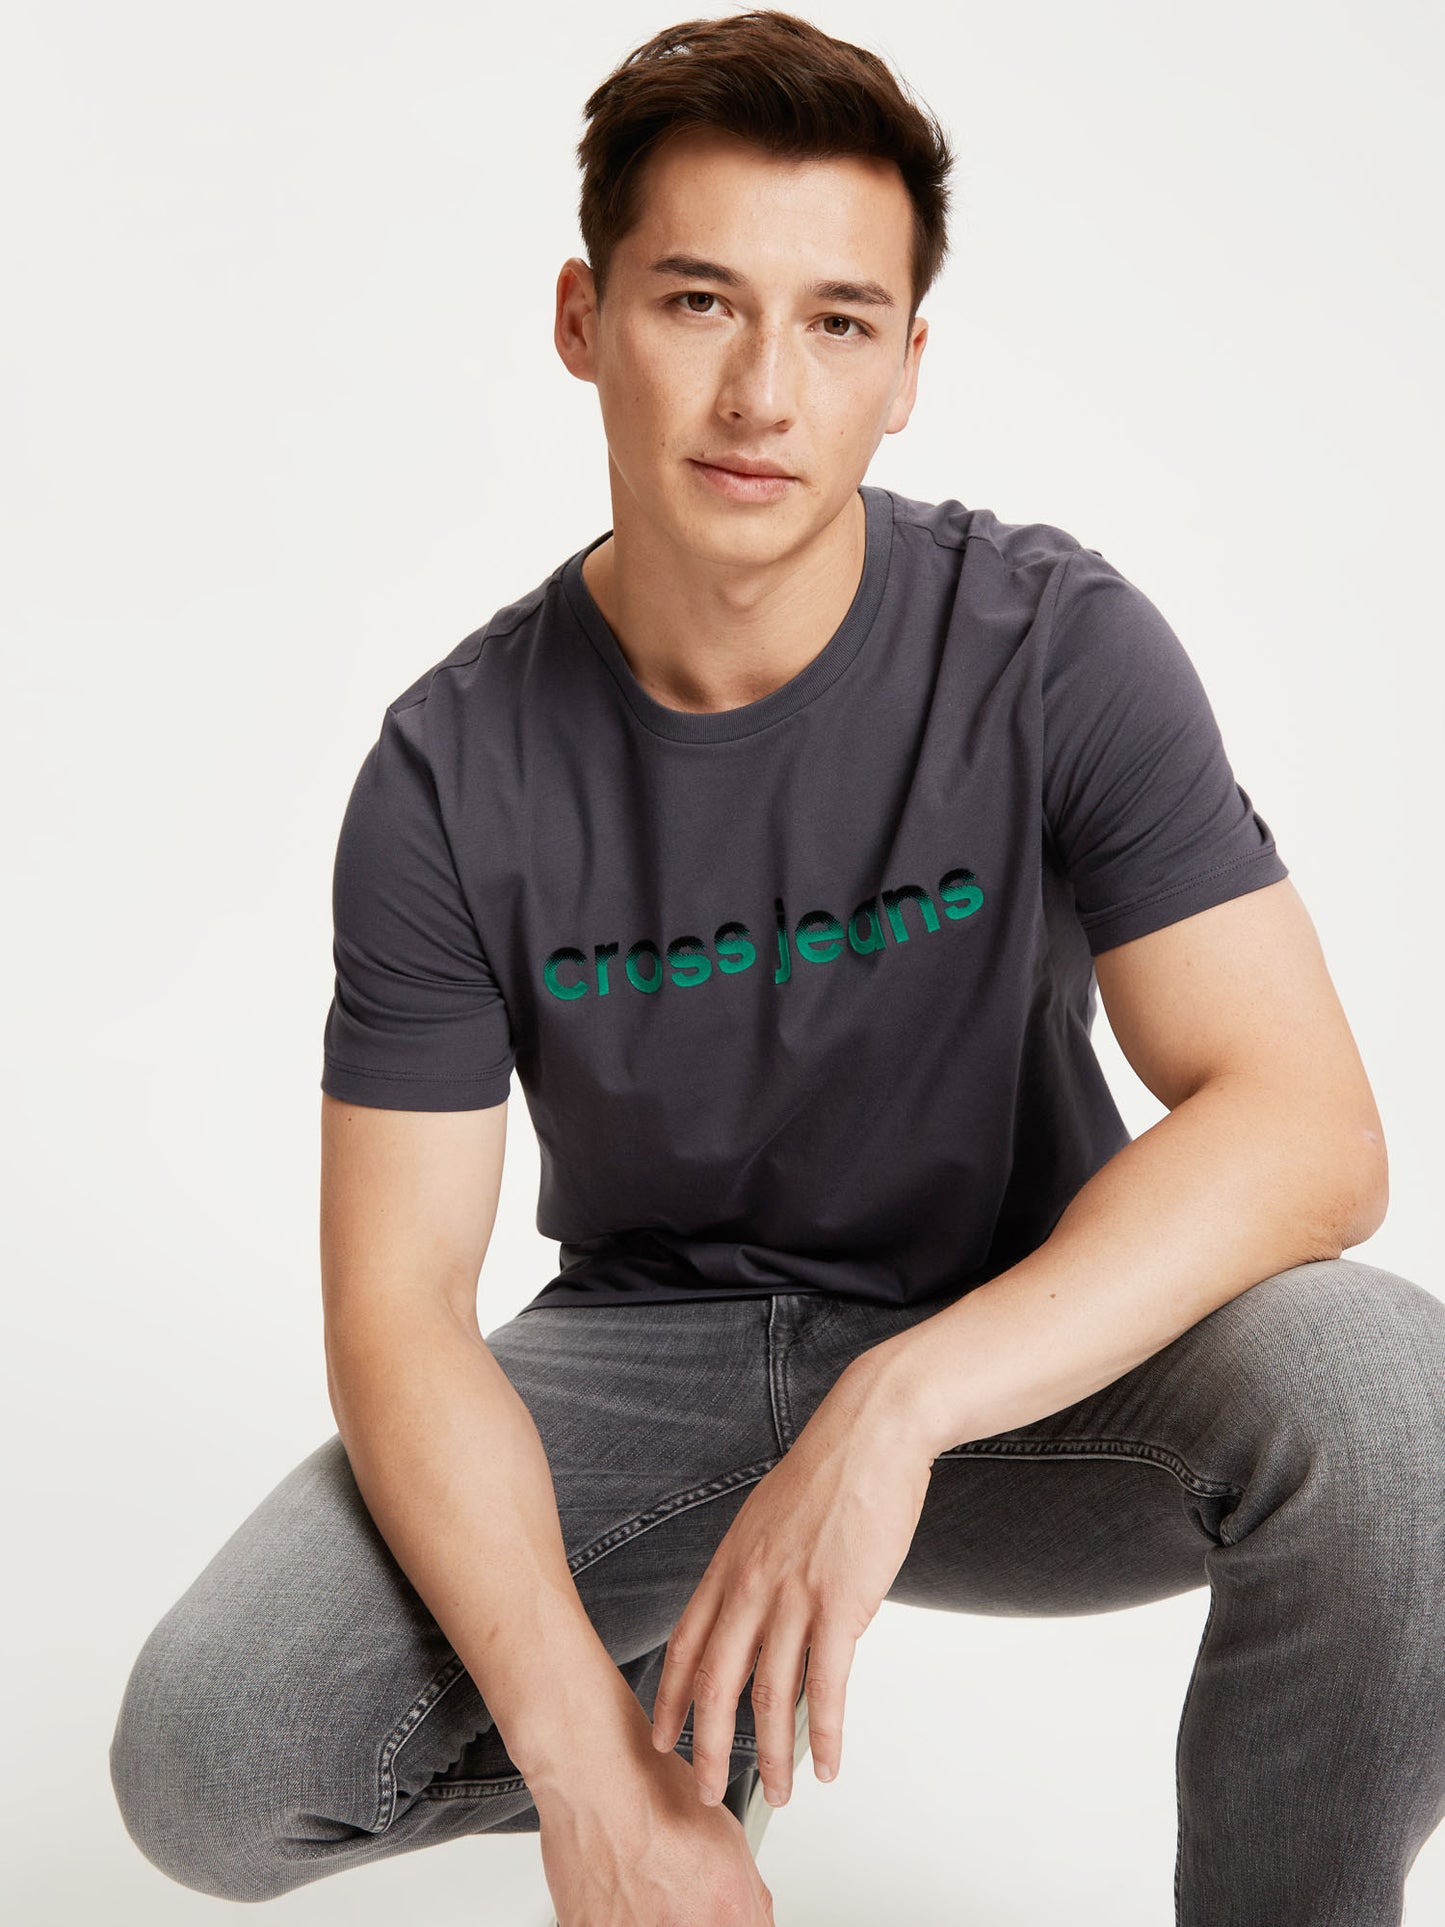 Men's regular T-shirt with label print, anthracite.